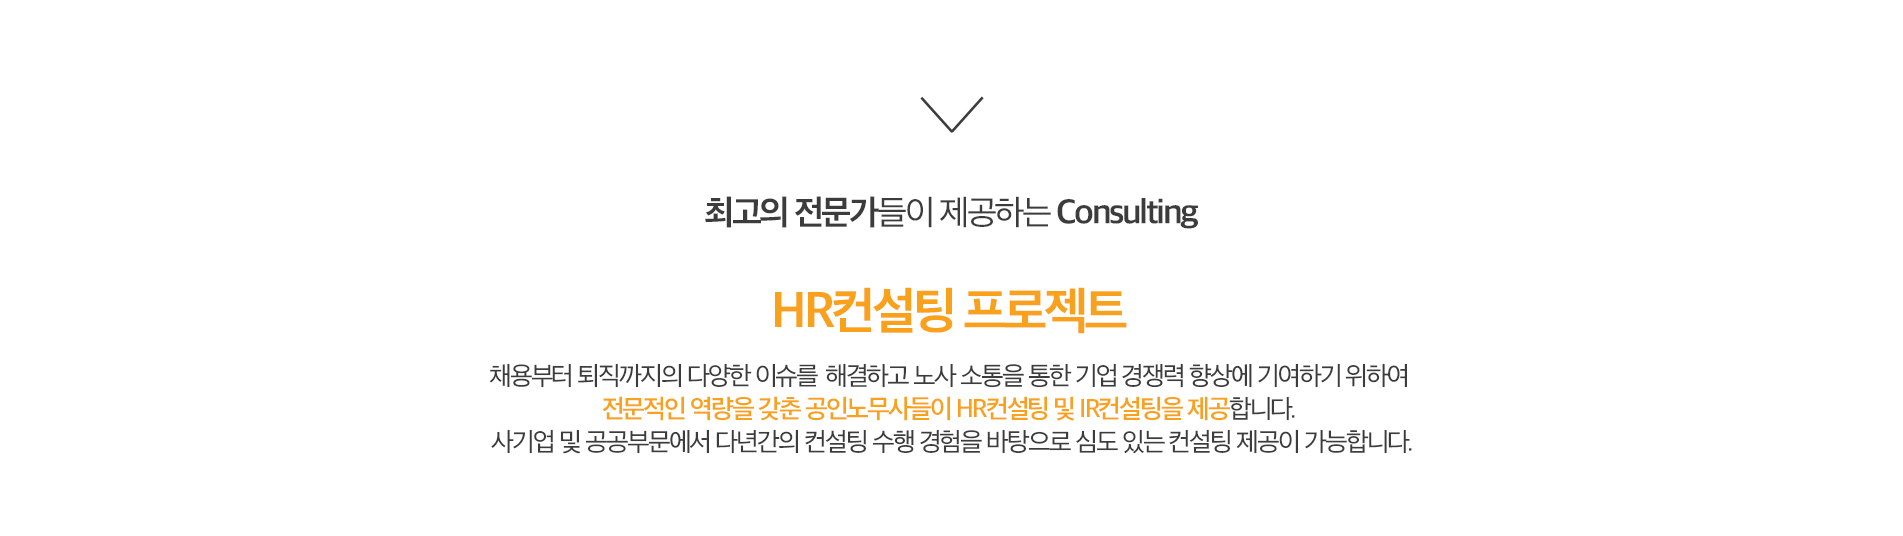 HR컨설팅 프로젝트